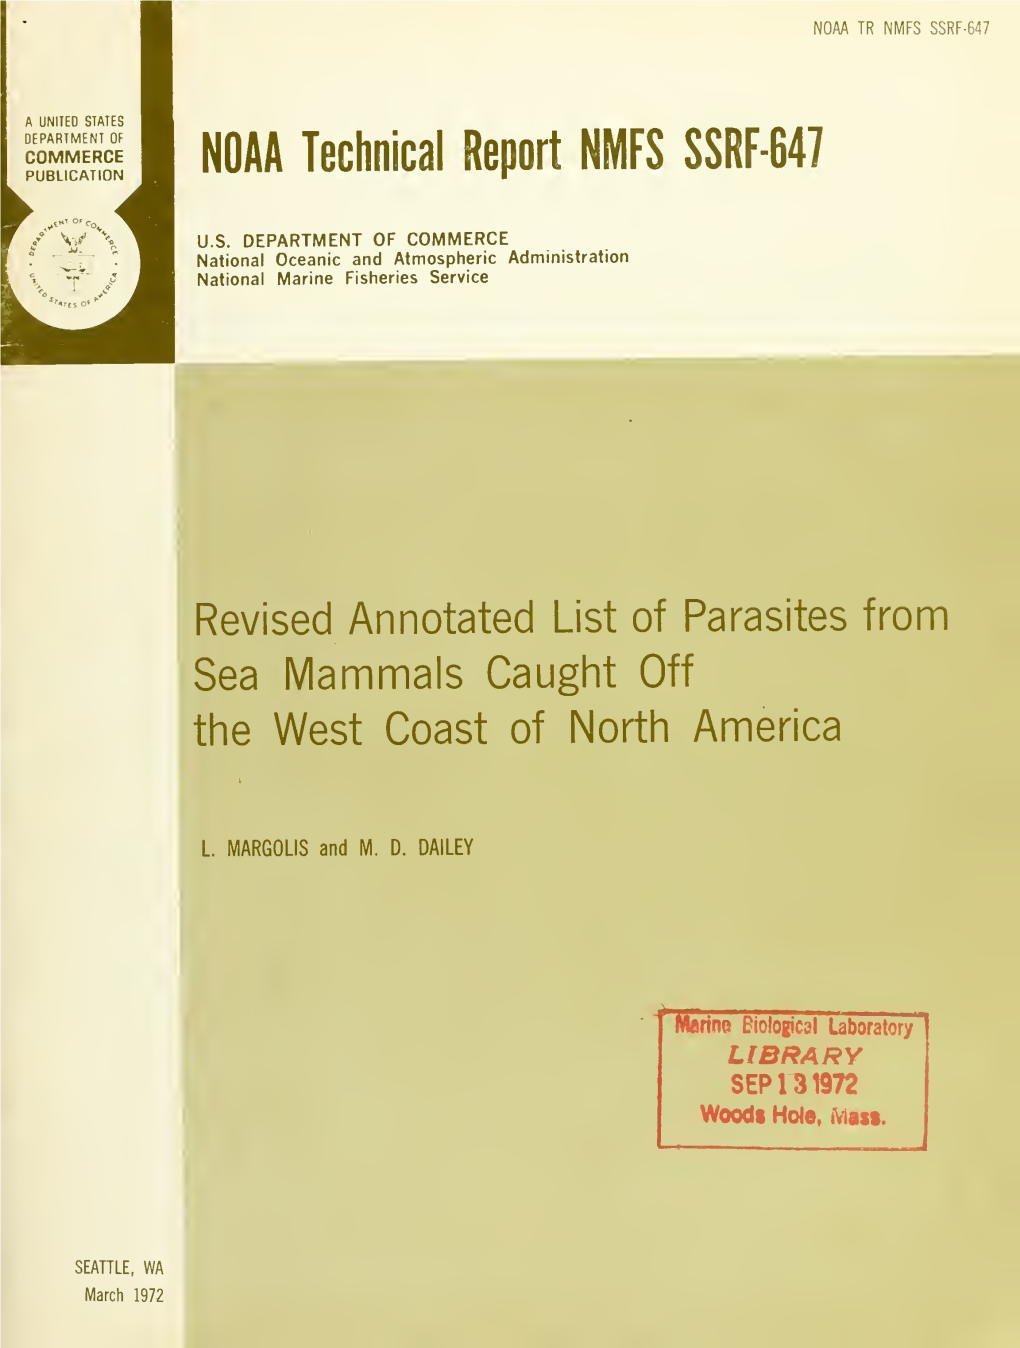 NOAA Technical Report NMFS SSRF-647